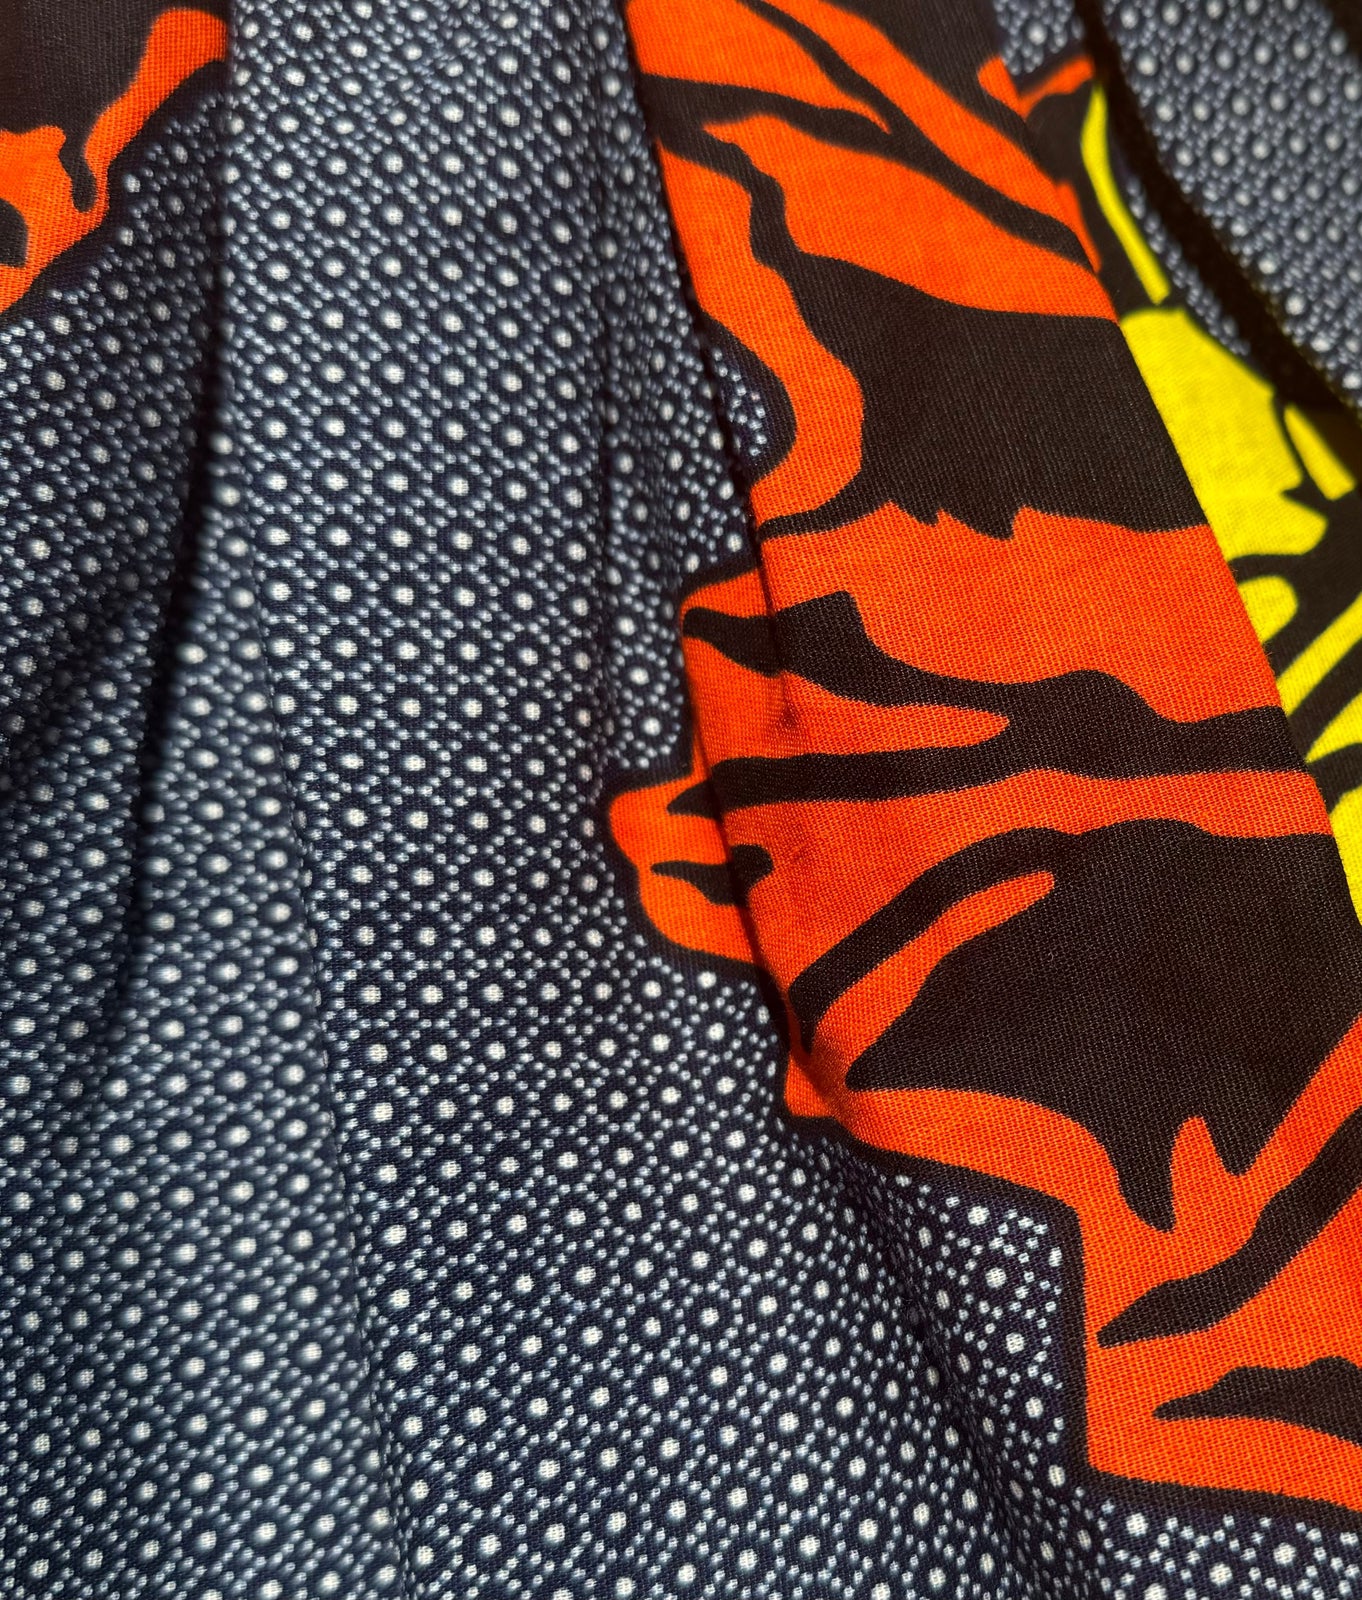 Orange leaves Elastic Waist Mini Skirt African Print close up